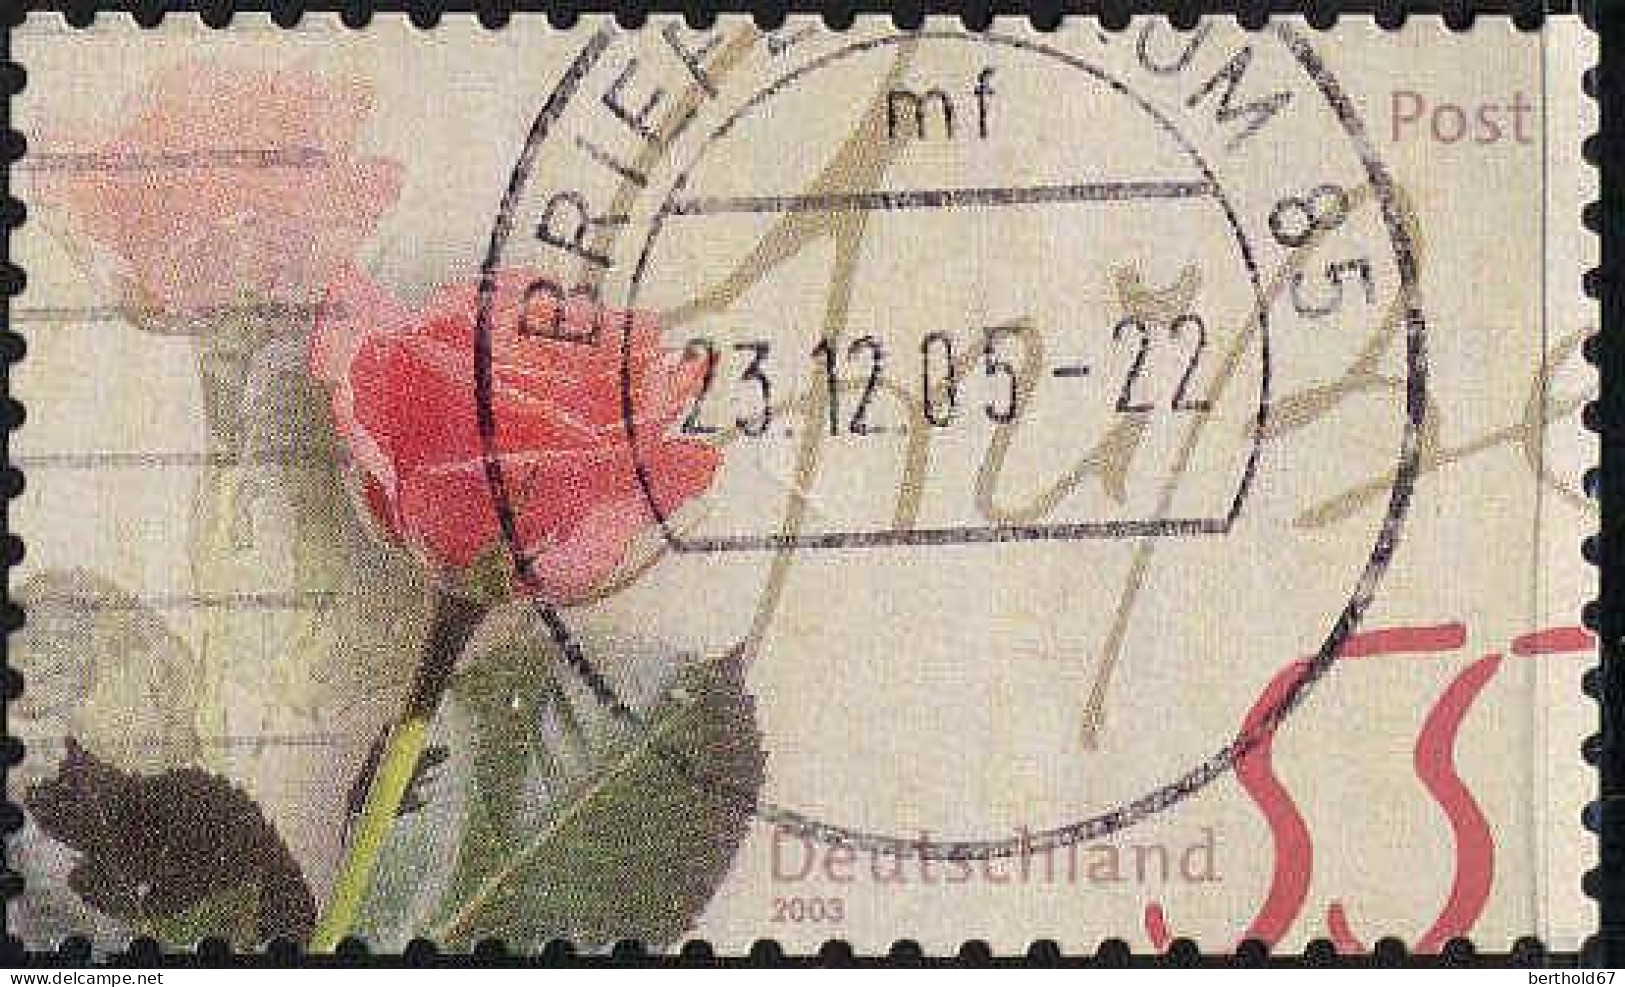 RFA Poste Obl Yv:2146 Mi:2321I Grüße Roses (TB Cachet Rond) (Thème) - Rozen